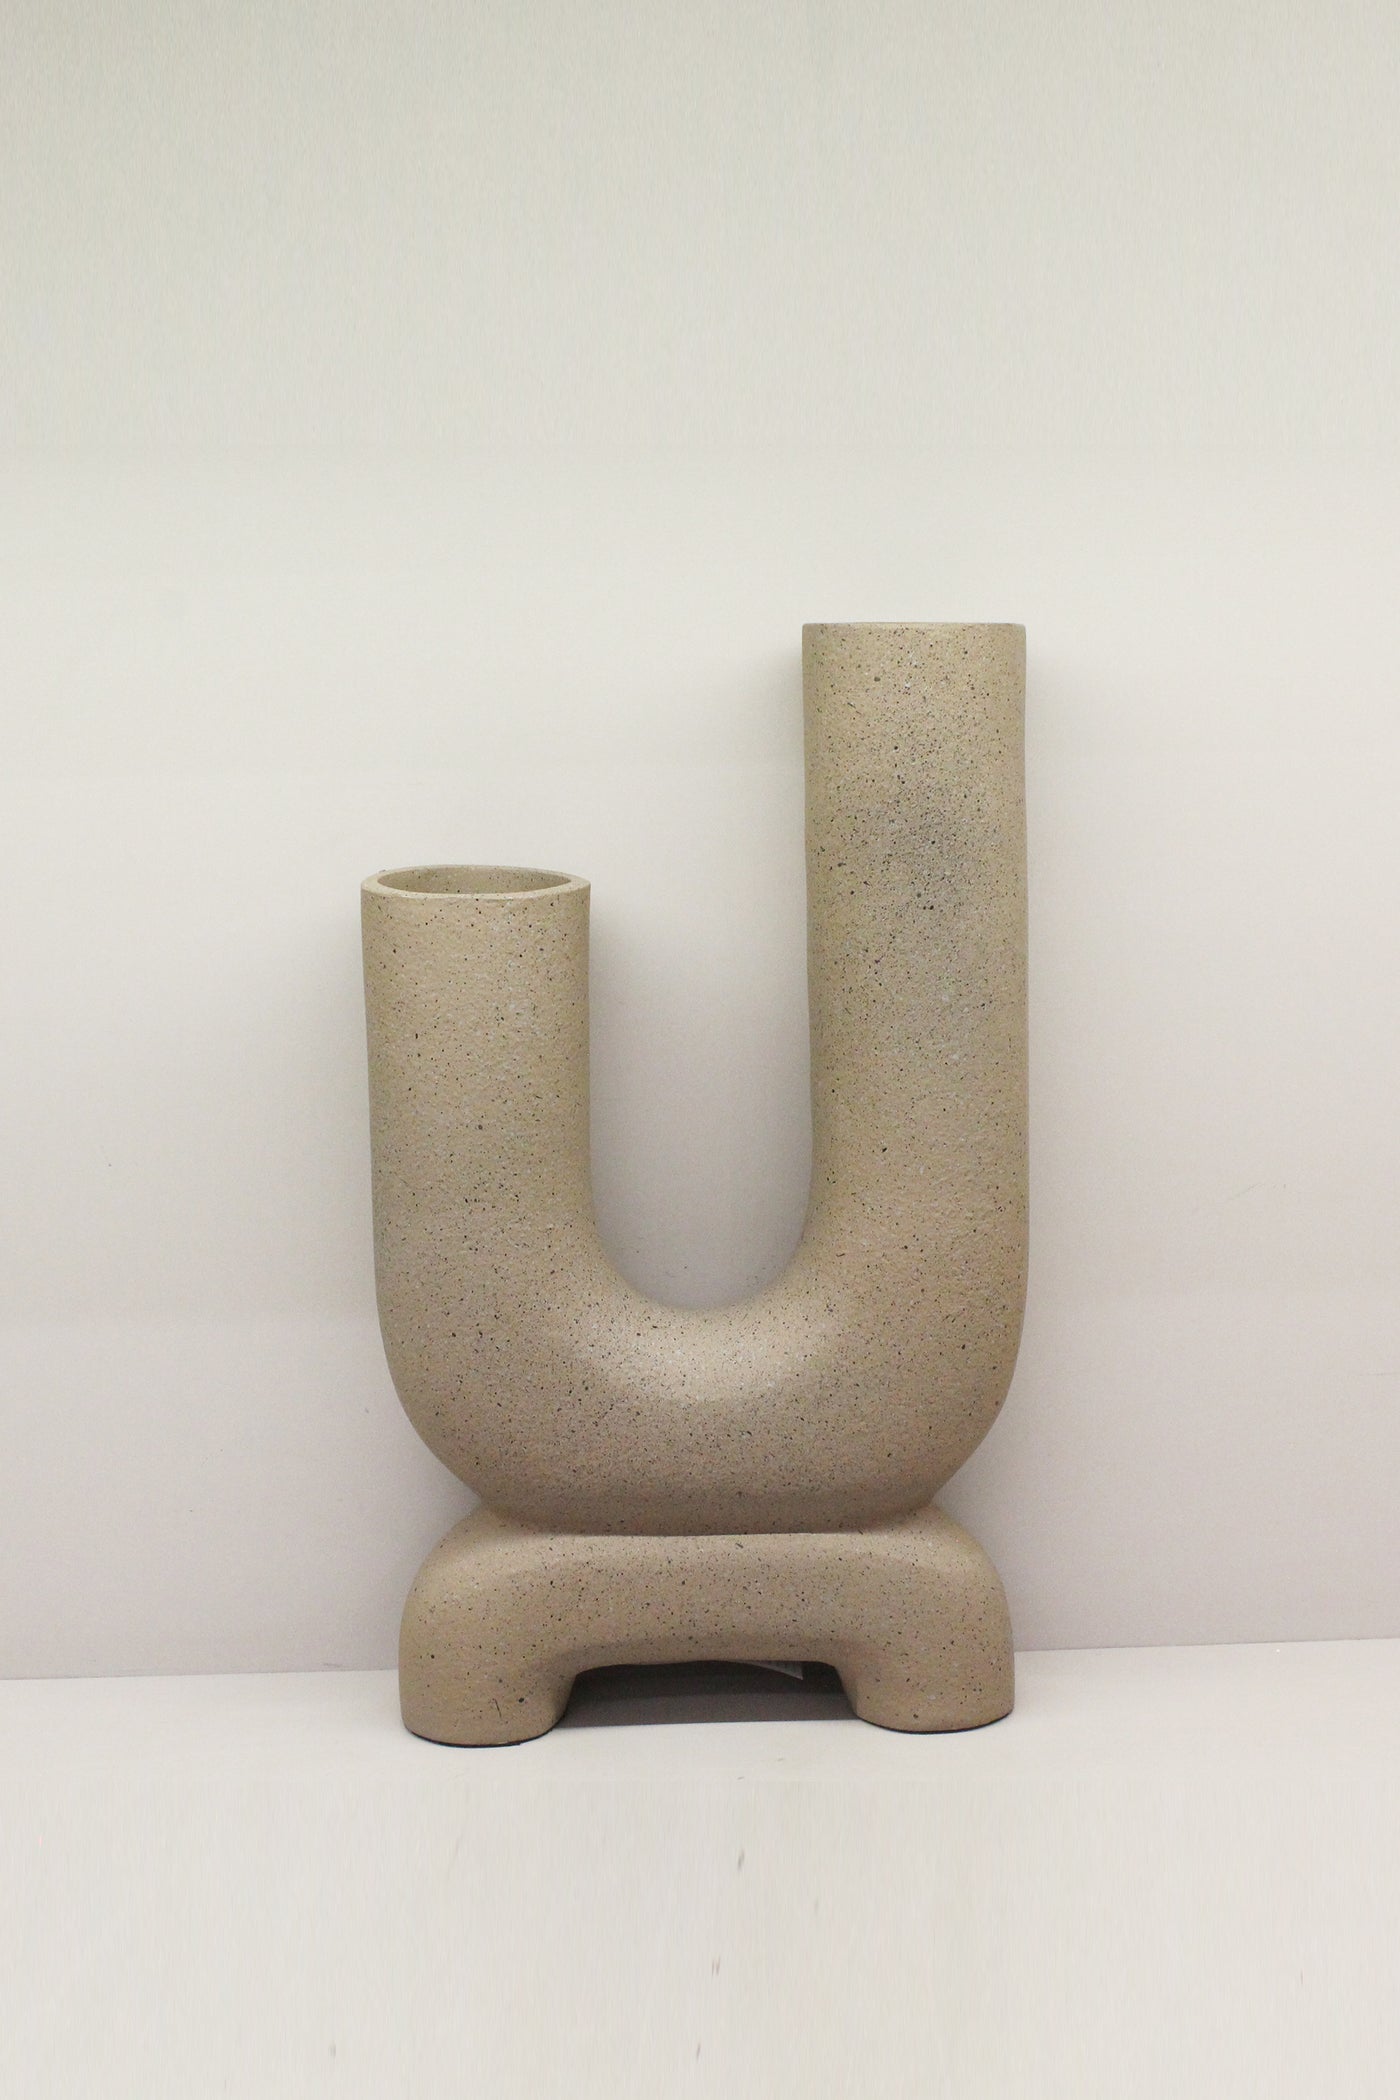 U Shaped Ceramic Flower vase for your Home or Office Decor-Large